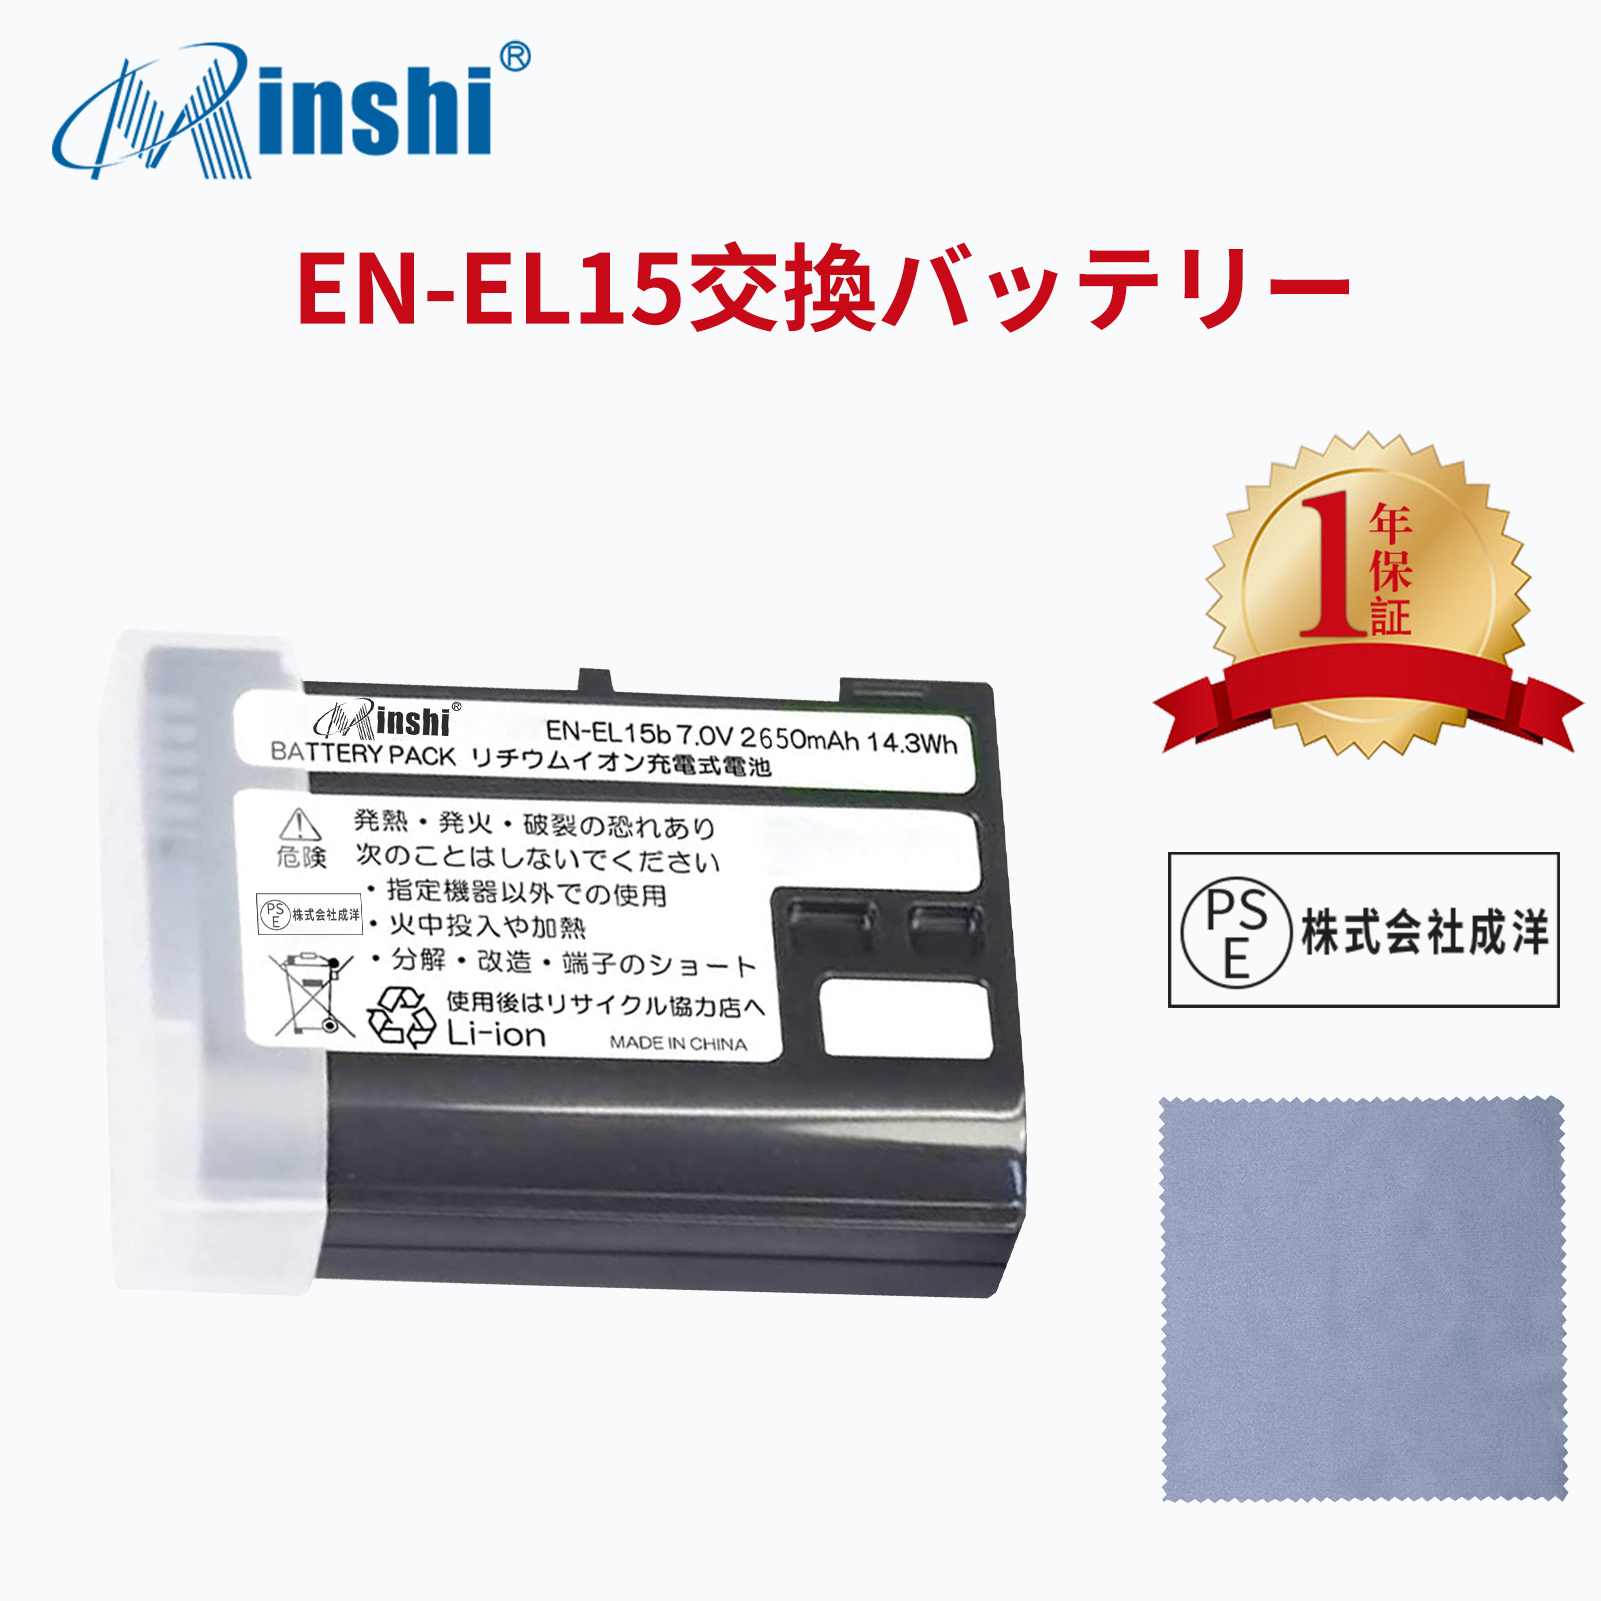 【清潔布ー付】minshi Nikon Z7 EN-EL15  【2650mAh 7.0V 】 Z6 Z7 D750 PSE認定済 高品質 EN-EL15C 交換用バッテリー